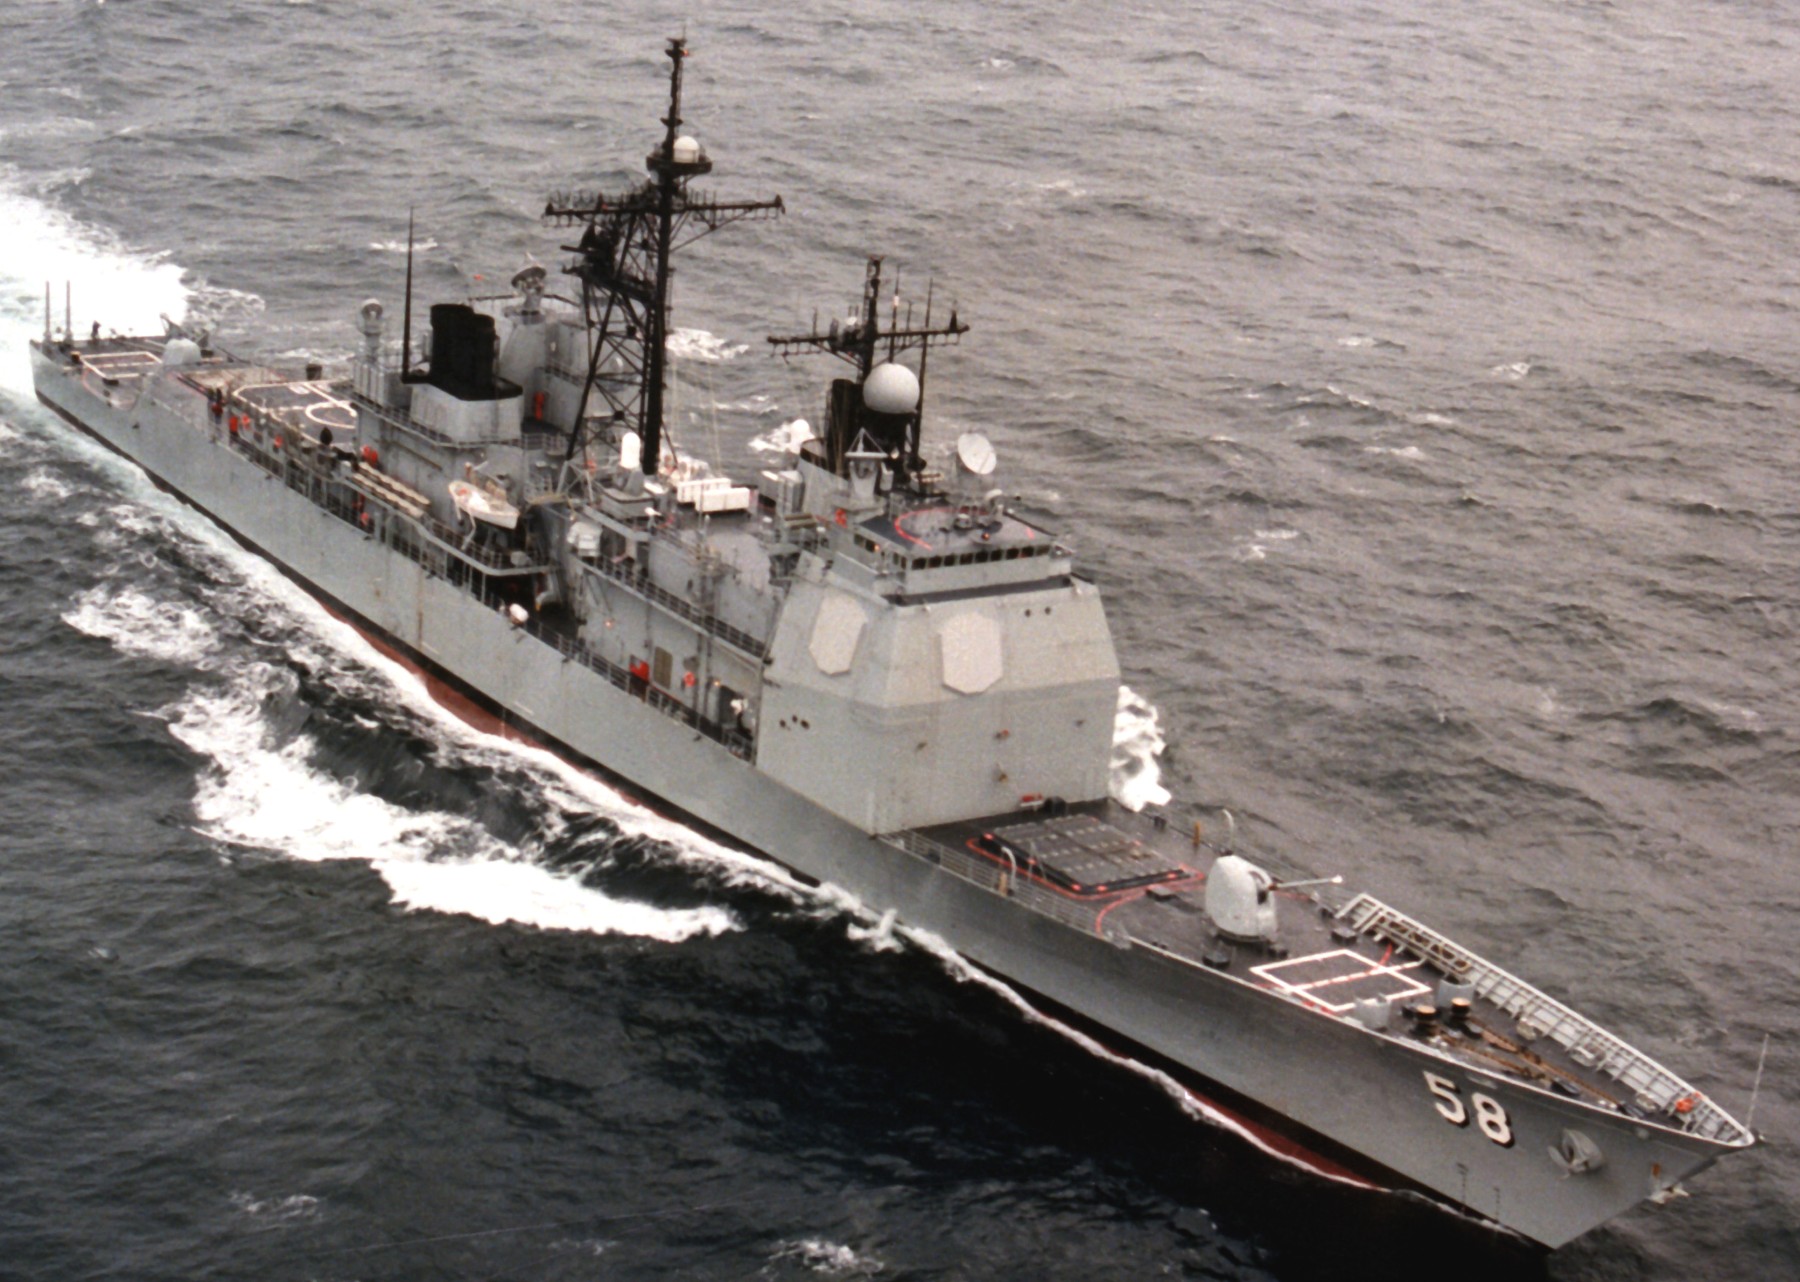 cg-58 uss philippine sea ticonderoga class guided missile cruiser aegis us navy trials 78